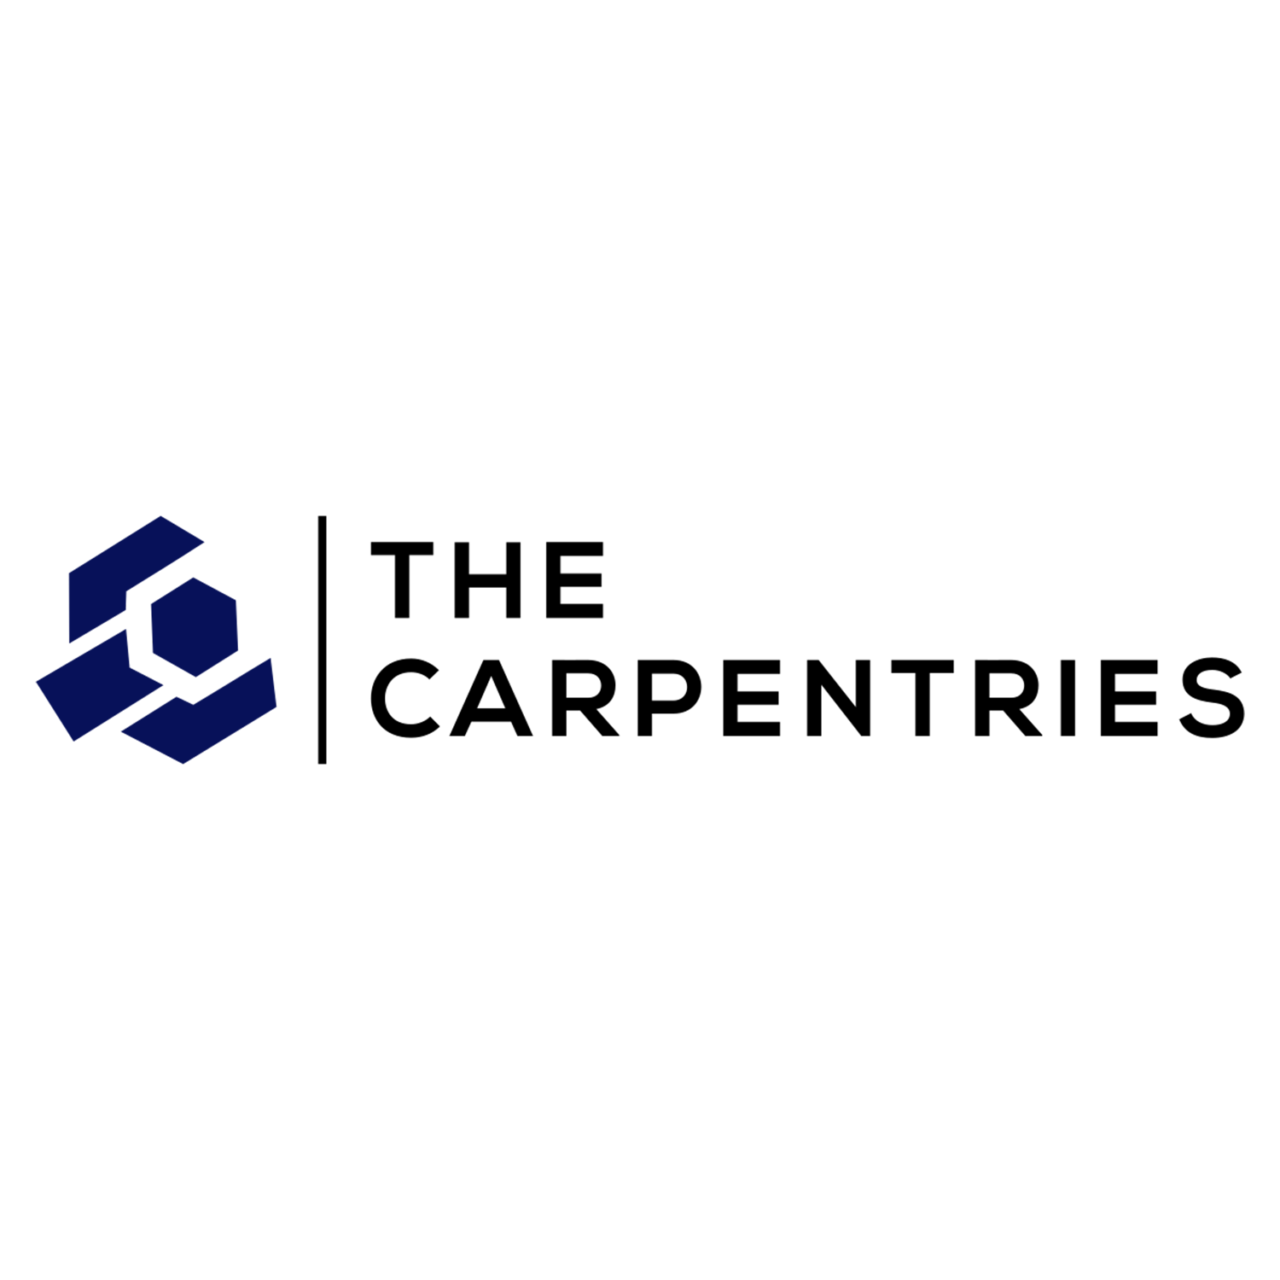 The carpentries logo